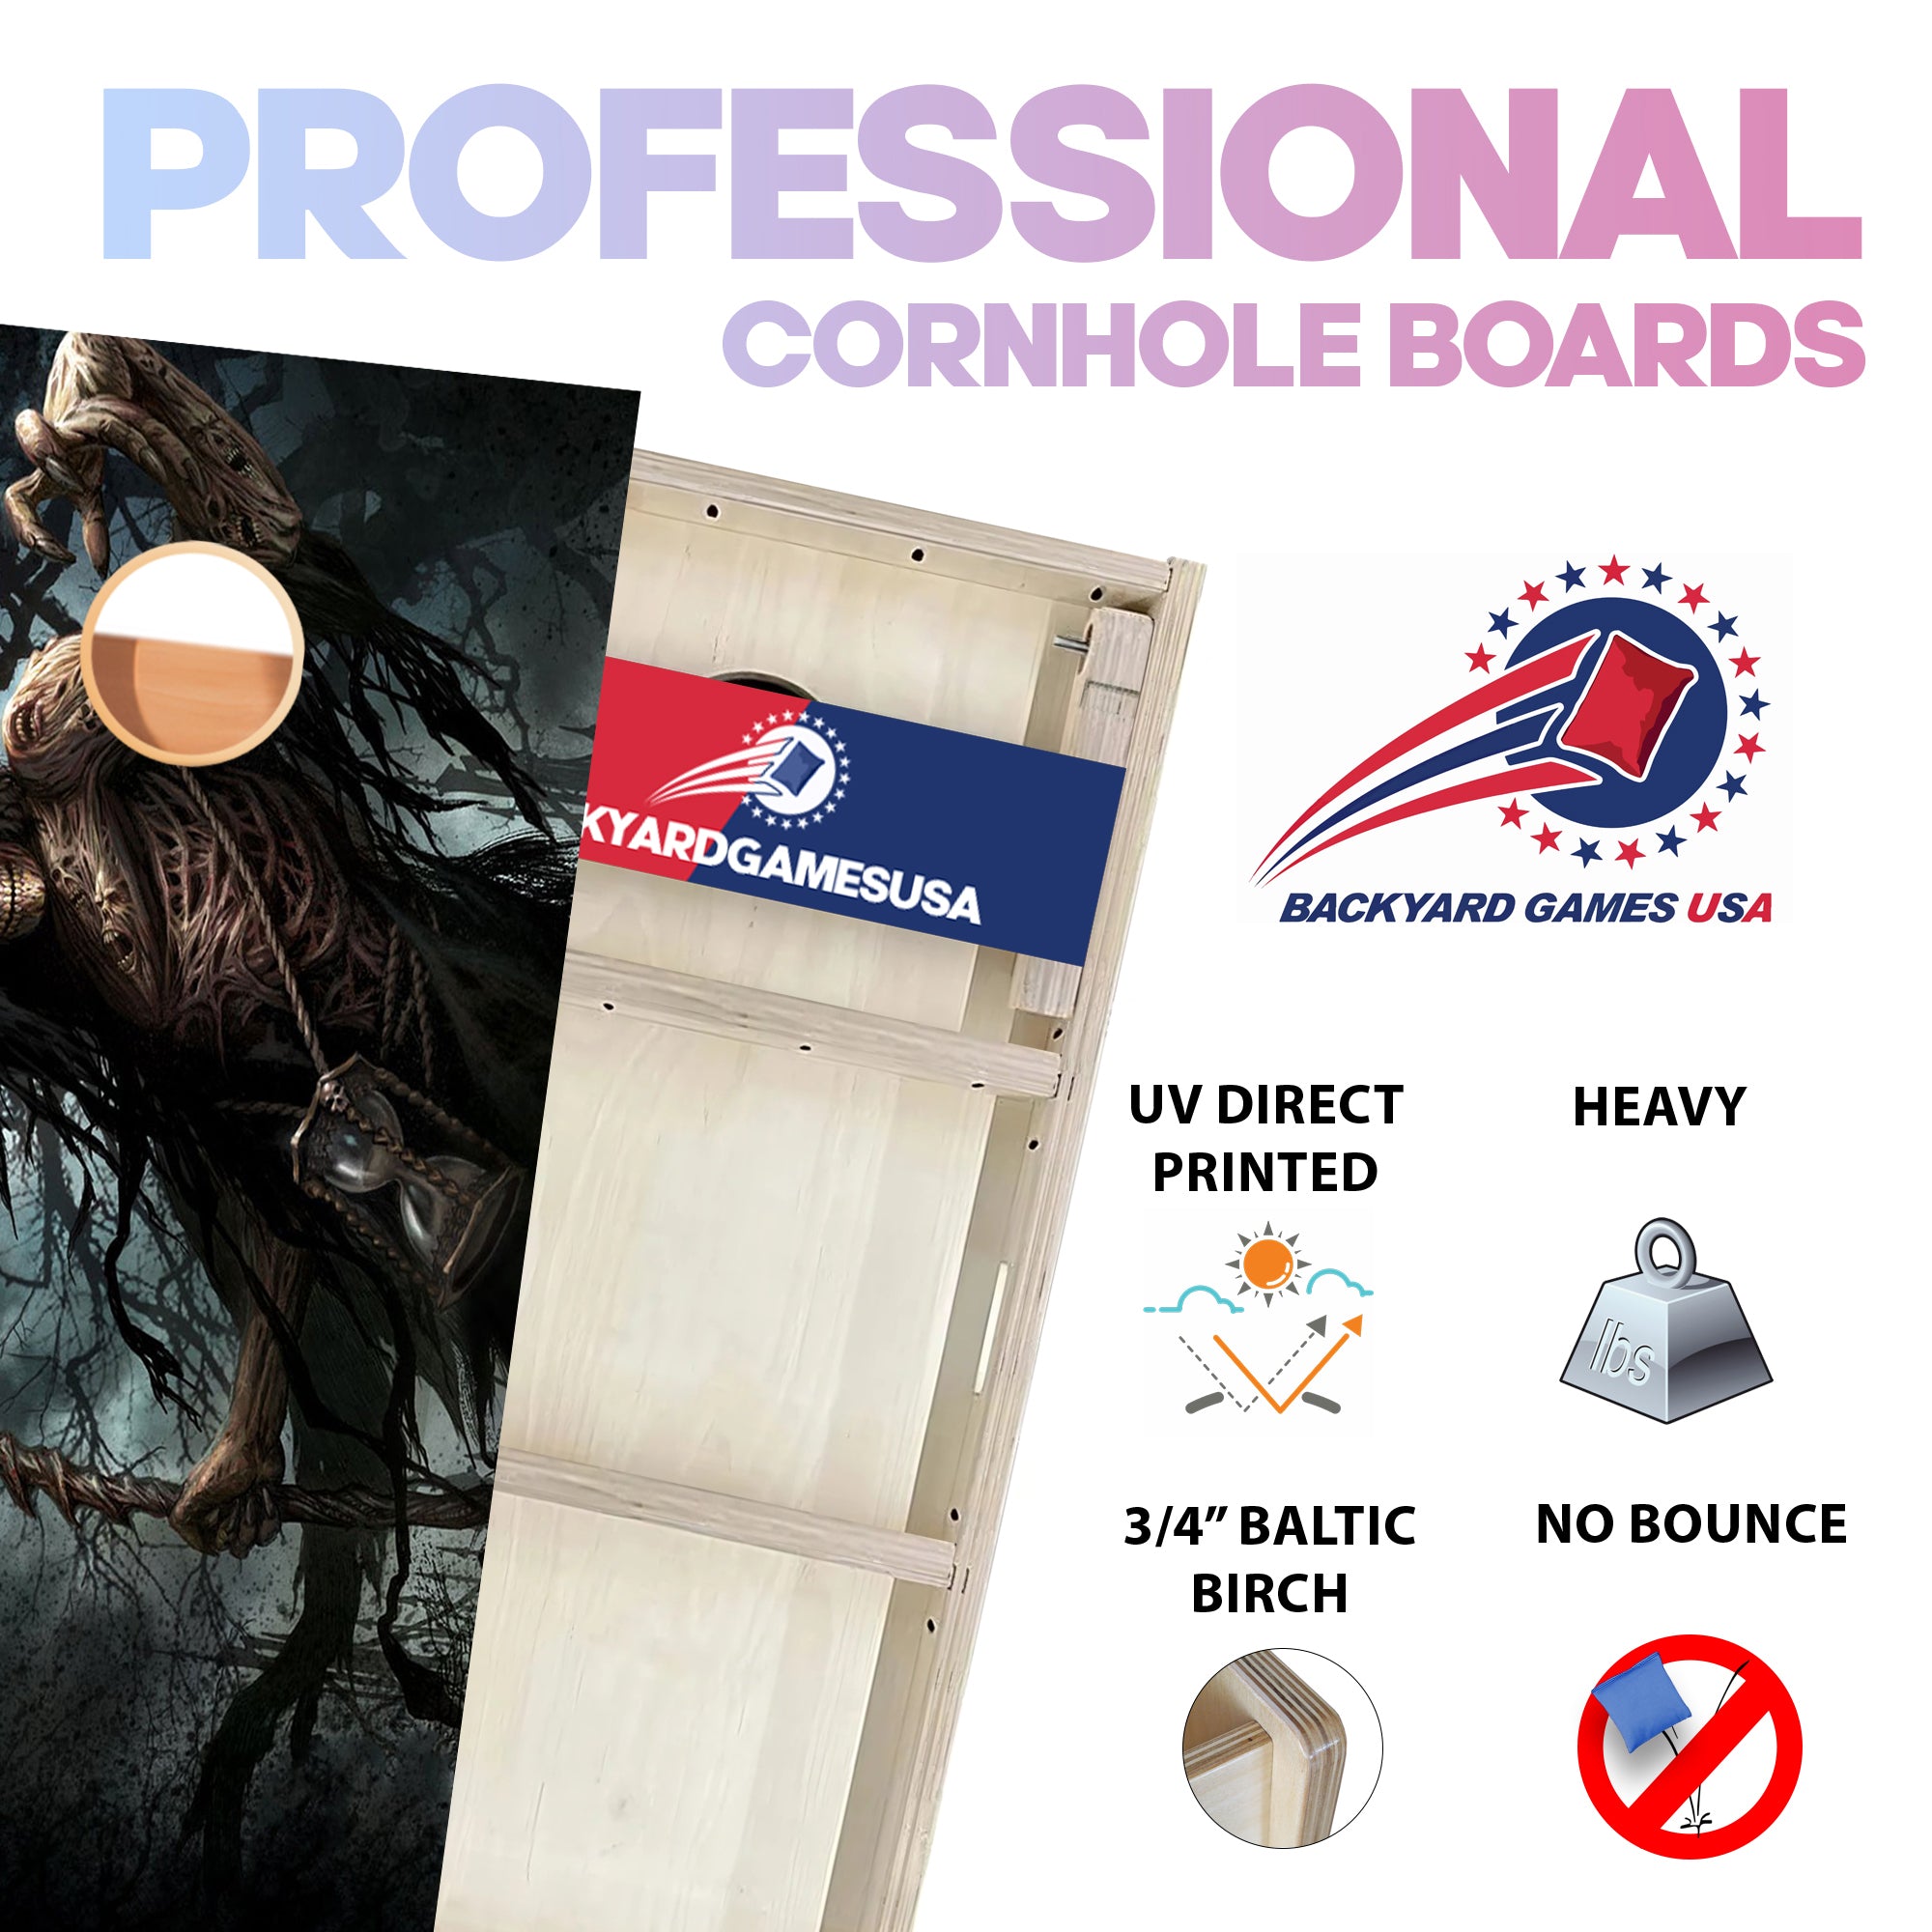 Halloween Professional Cornhole Boards